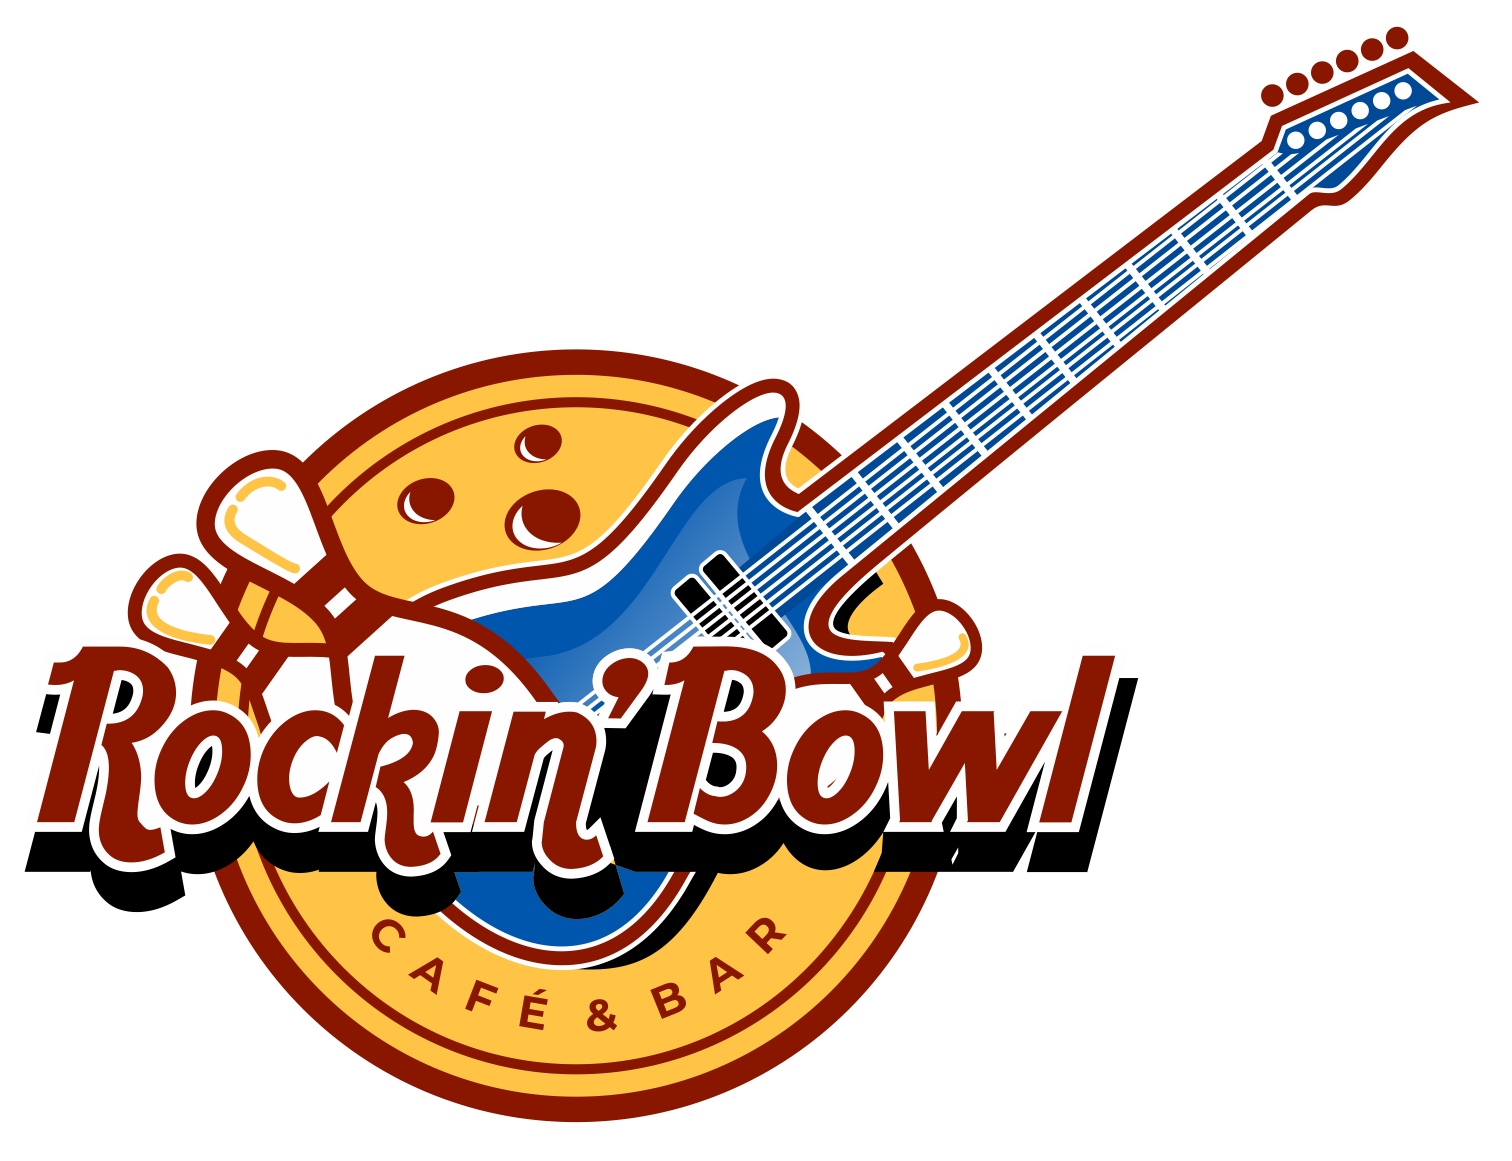 Rockin' Bowl Cafe and Bar